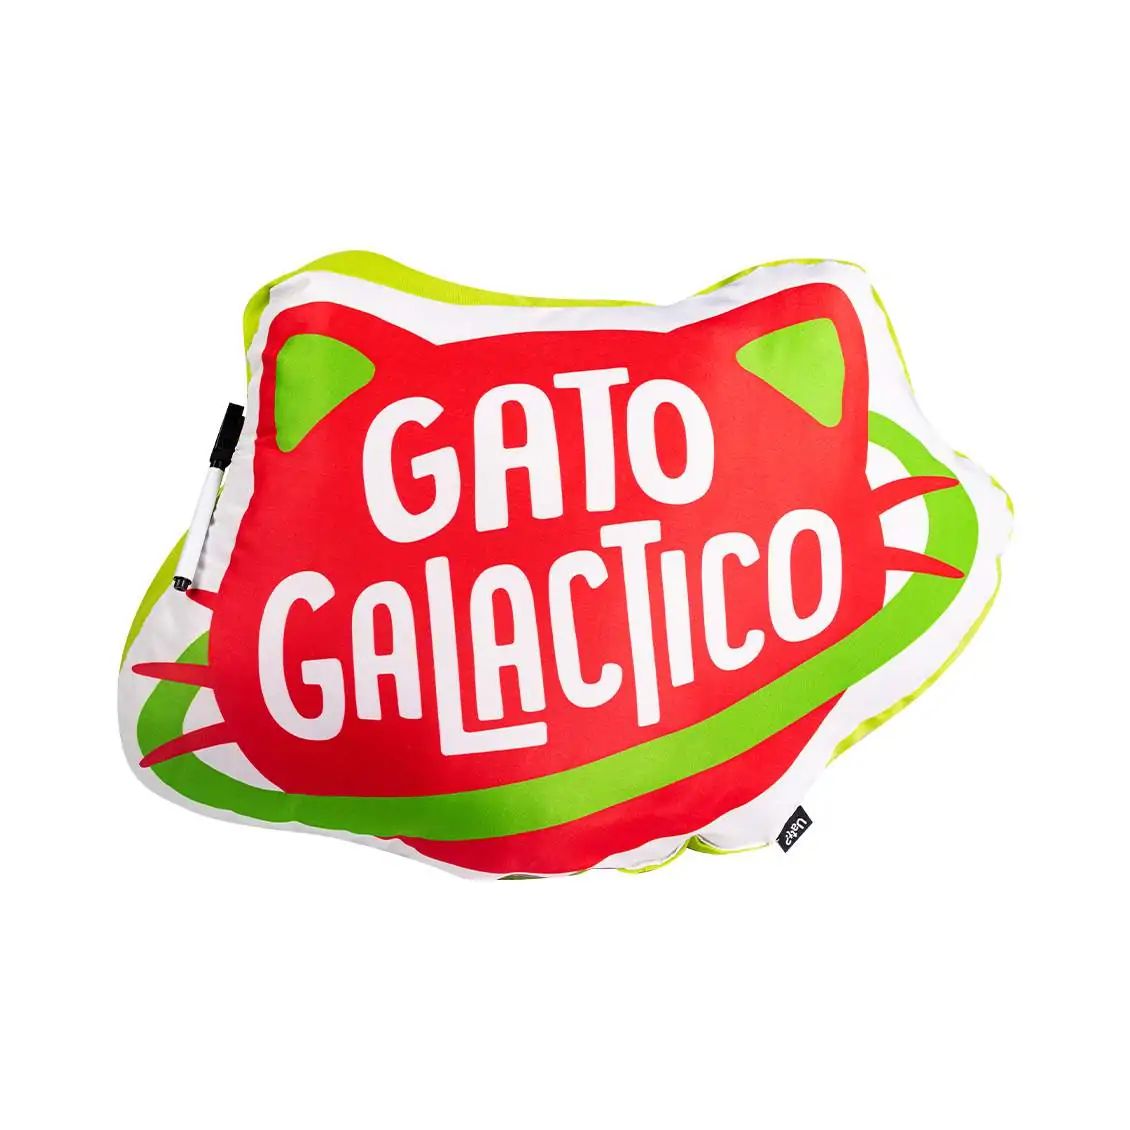 Boneco Gato Galactico 29 Cm r Gato Galactico Original